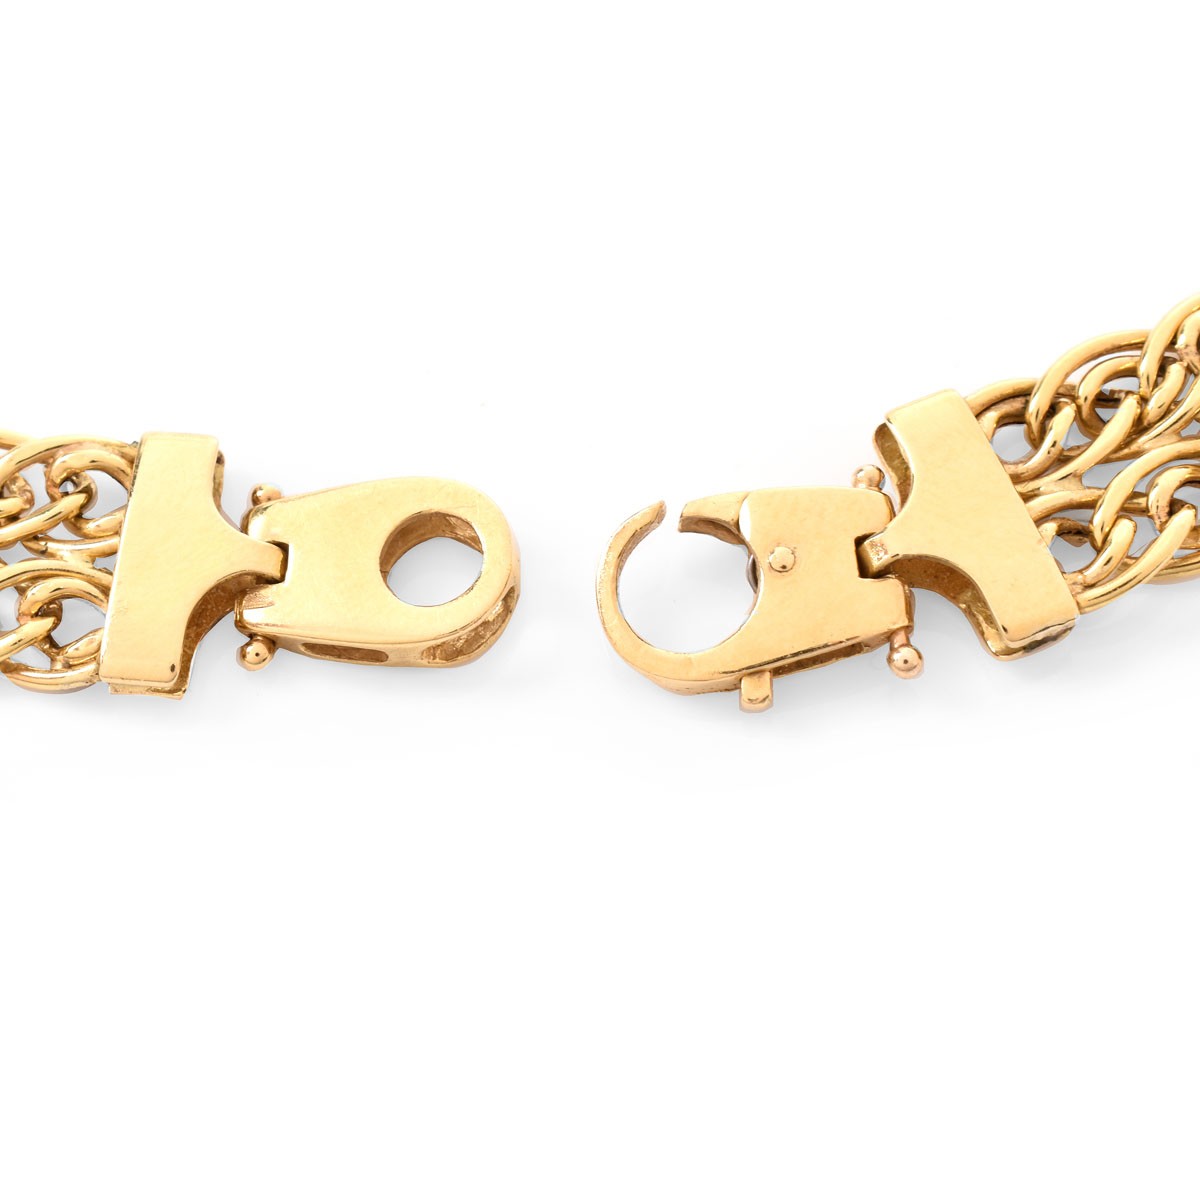 Vintage Italian 18K Gold Necklace